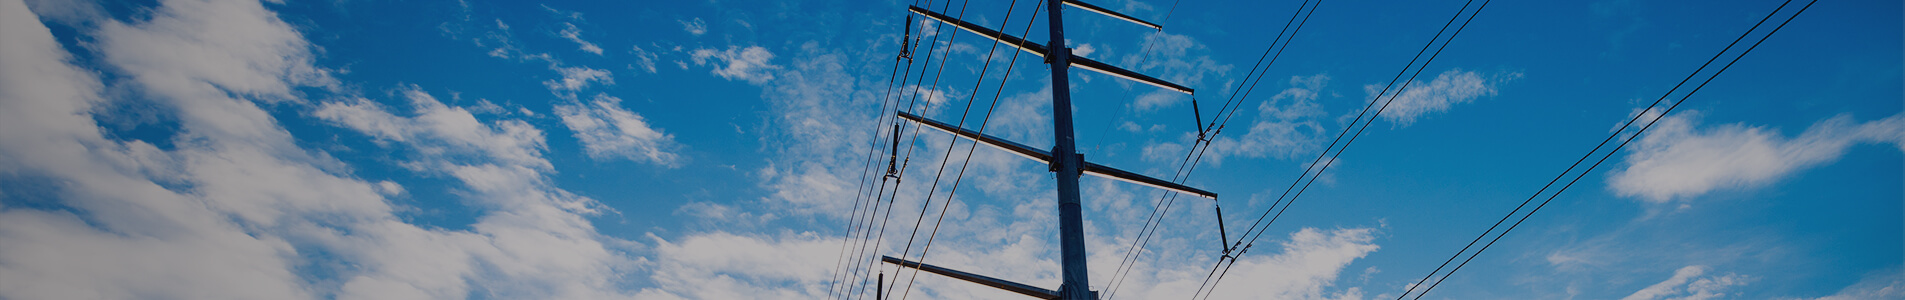 utility transmission pole against sky